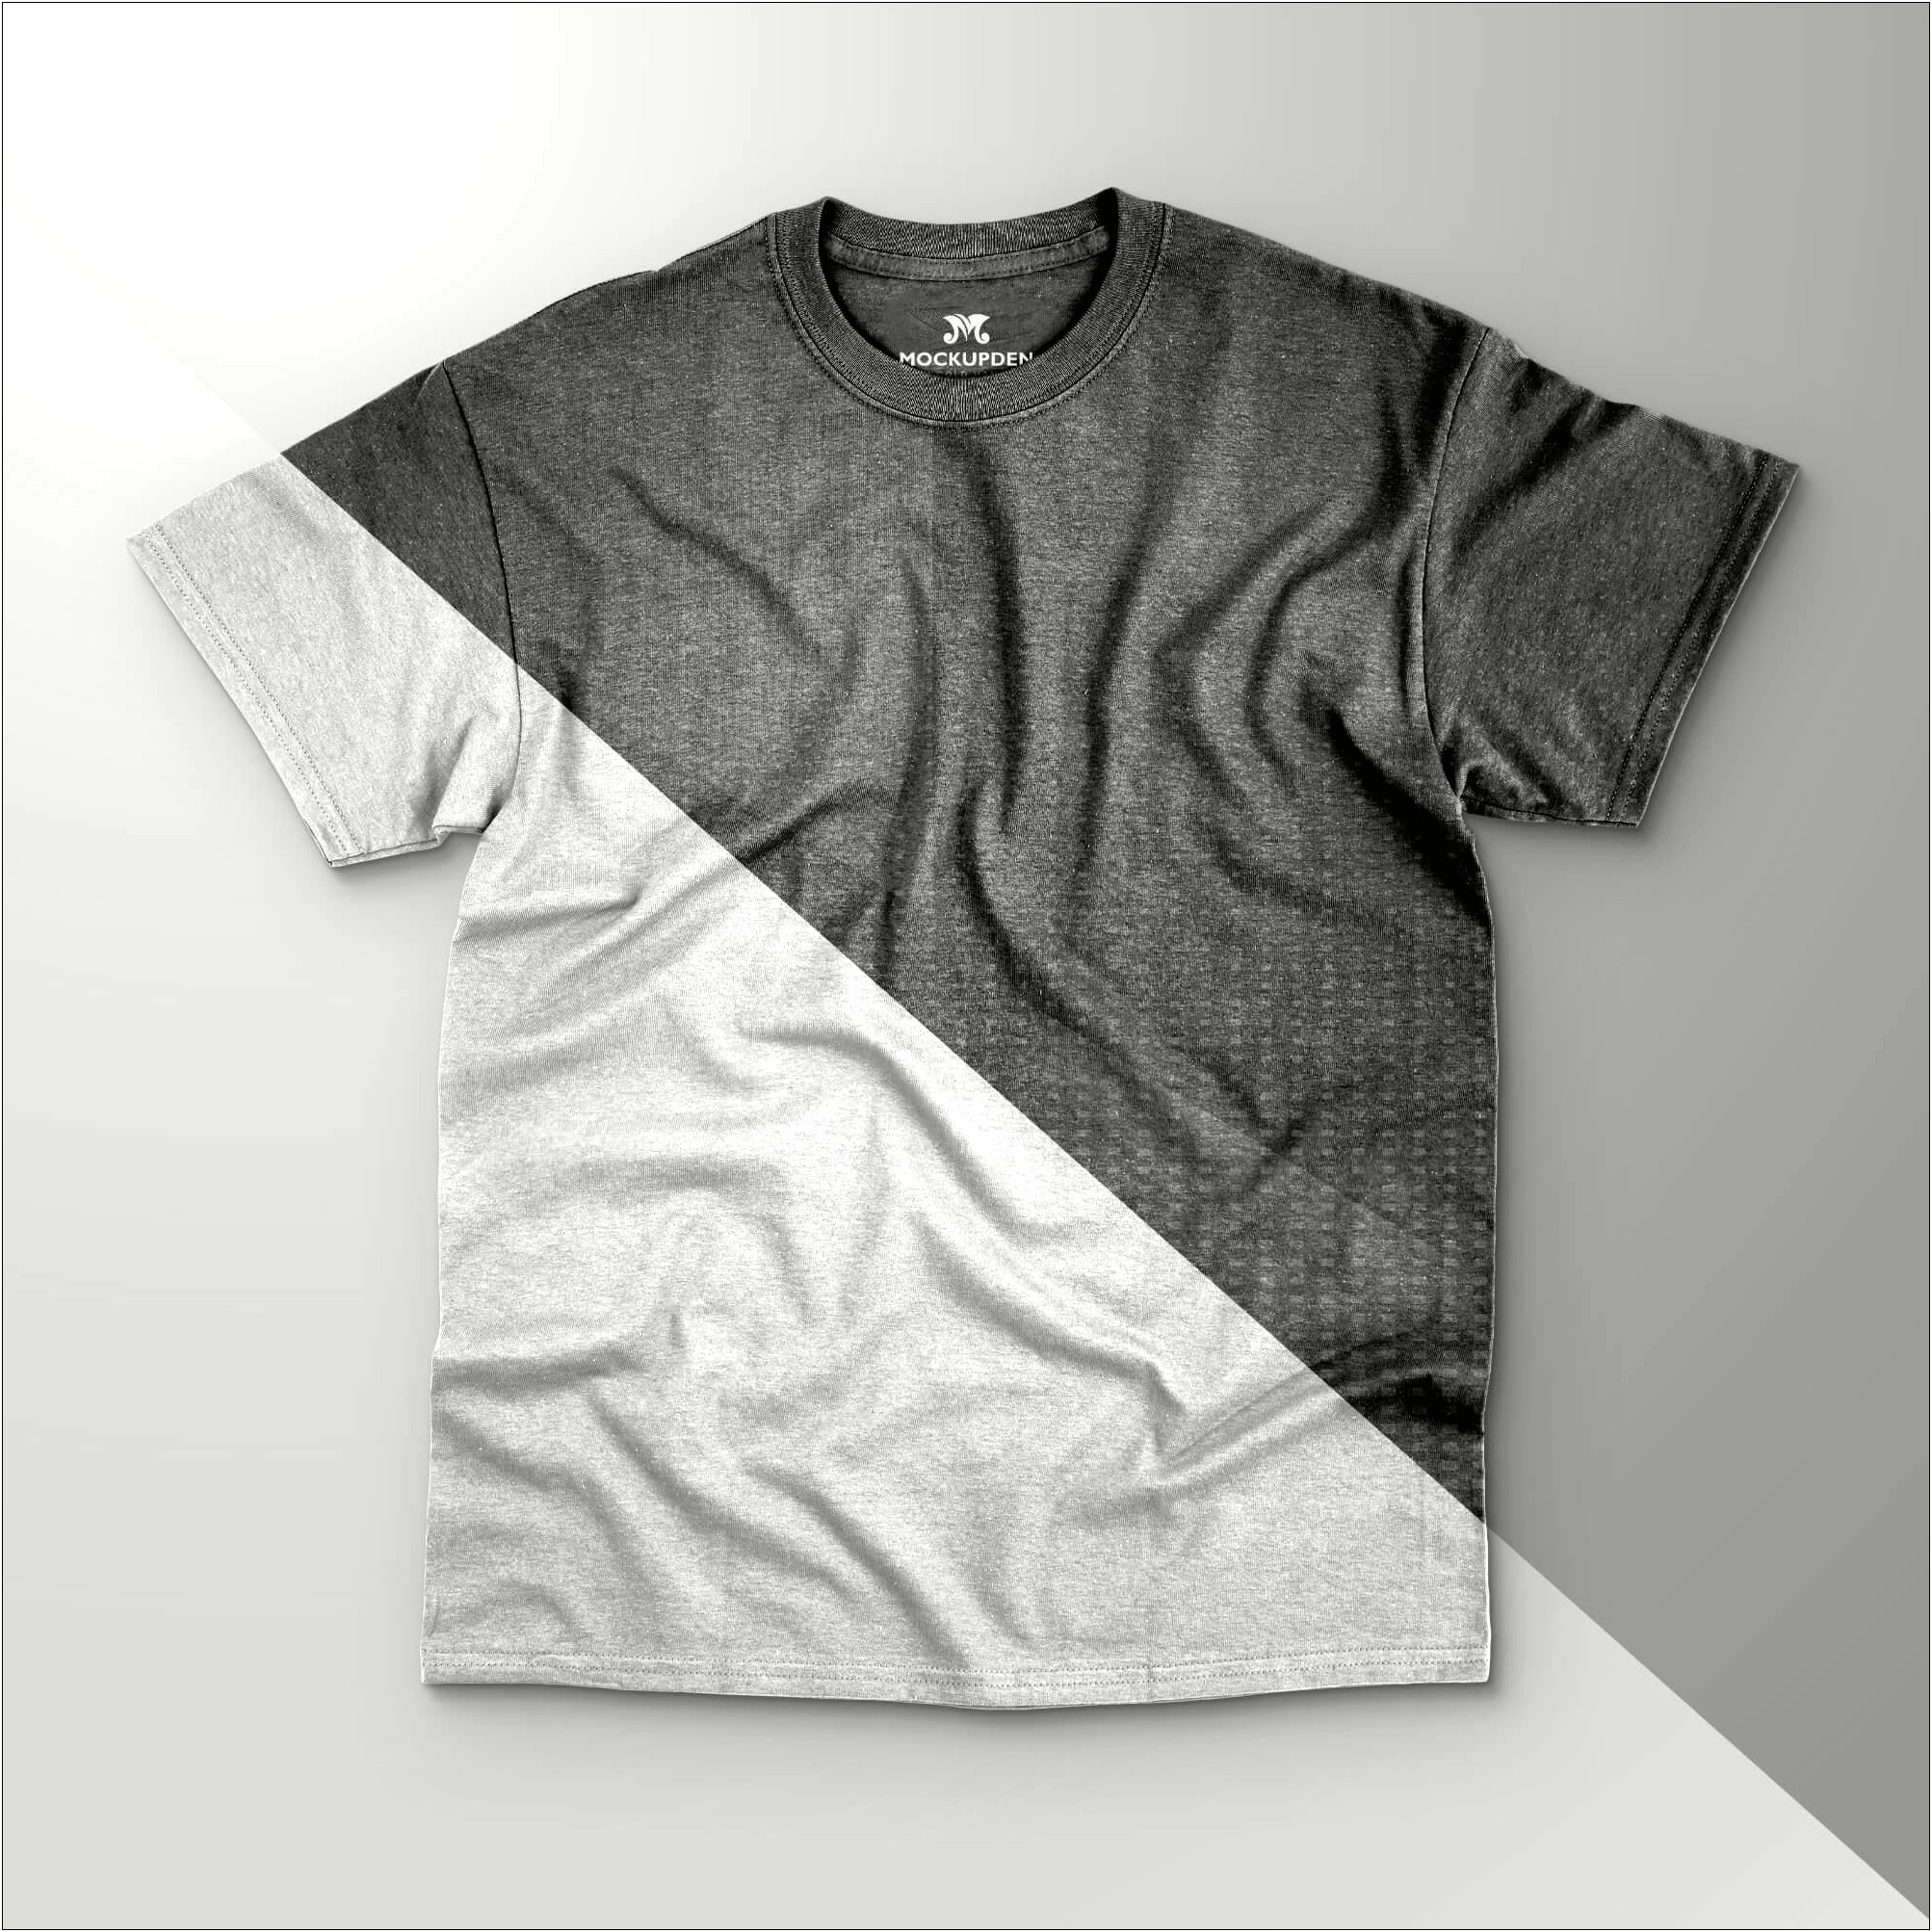 Free Black T Shirt Mockup Template